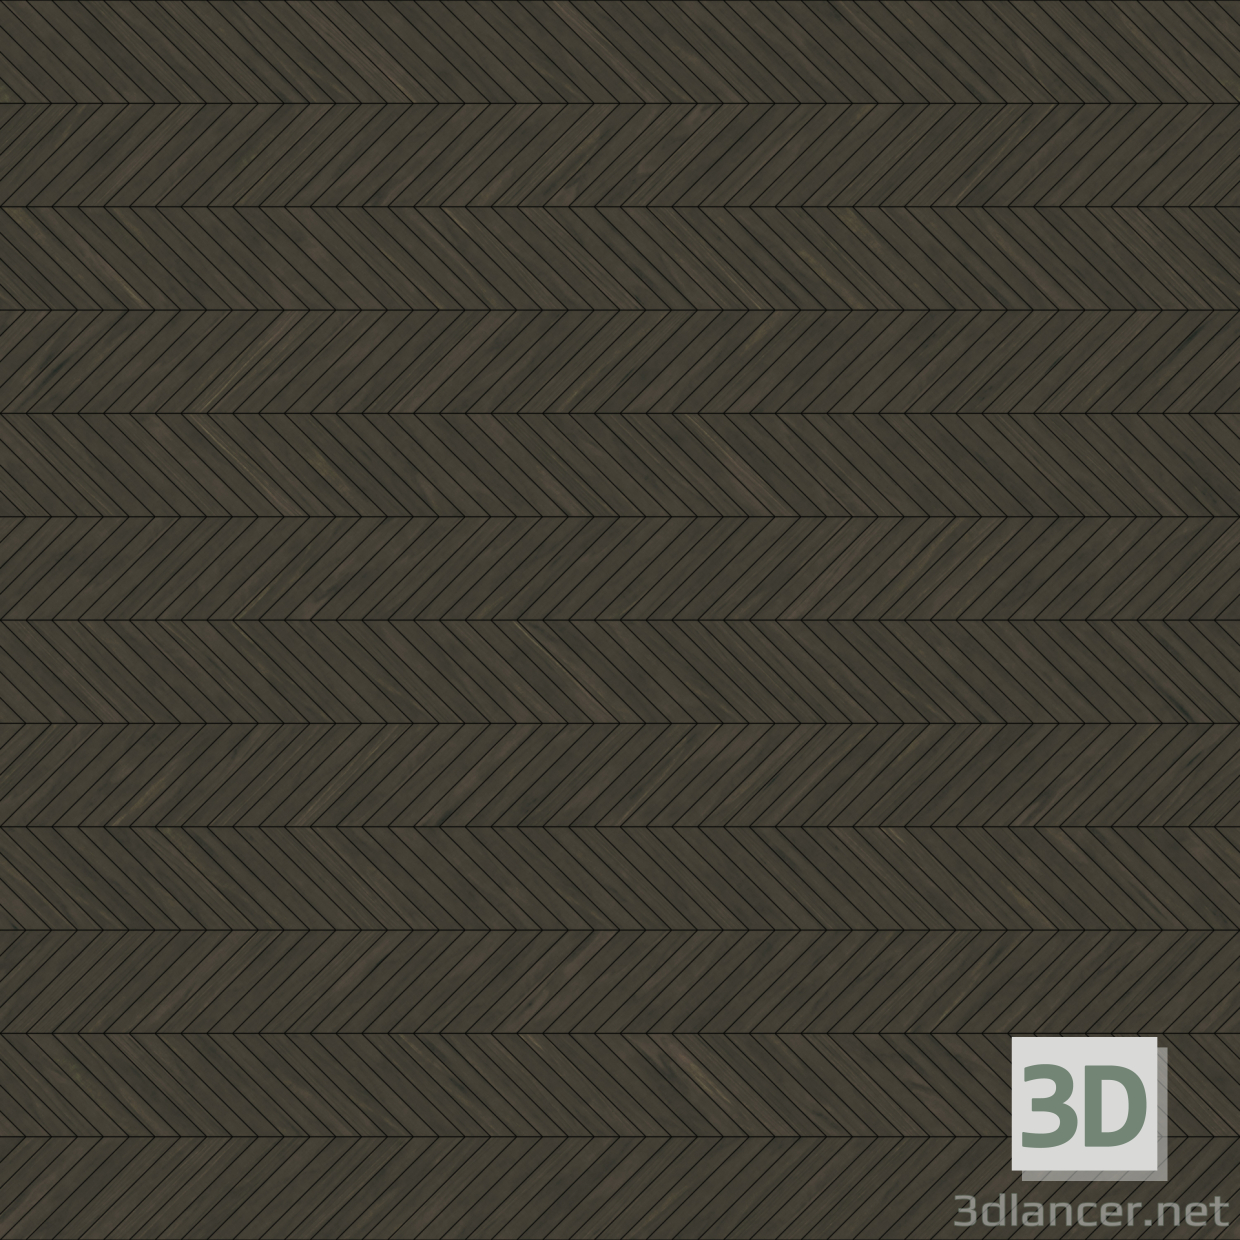 Texture parquet 45 free download - image